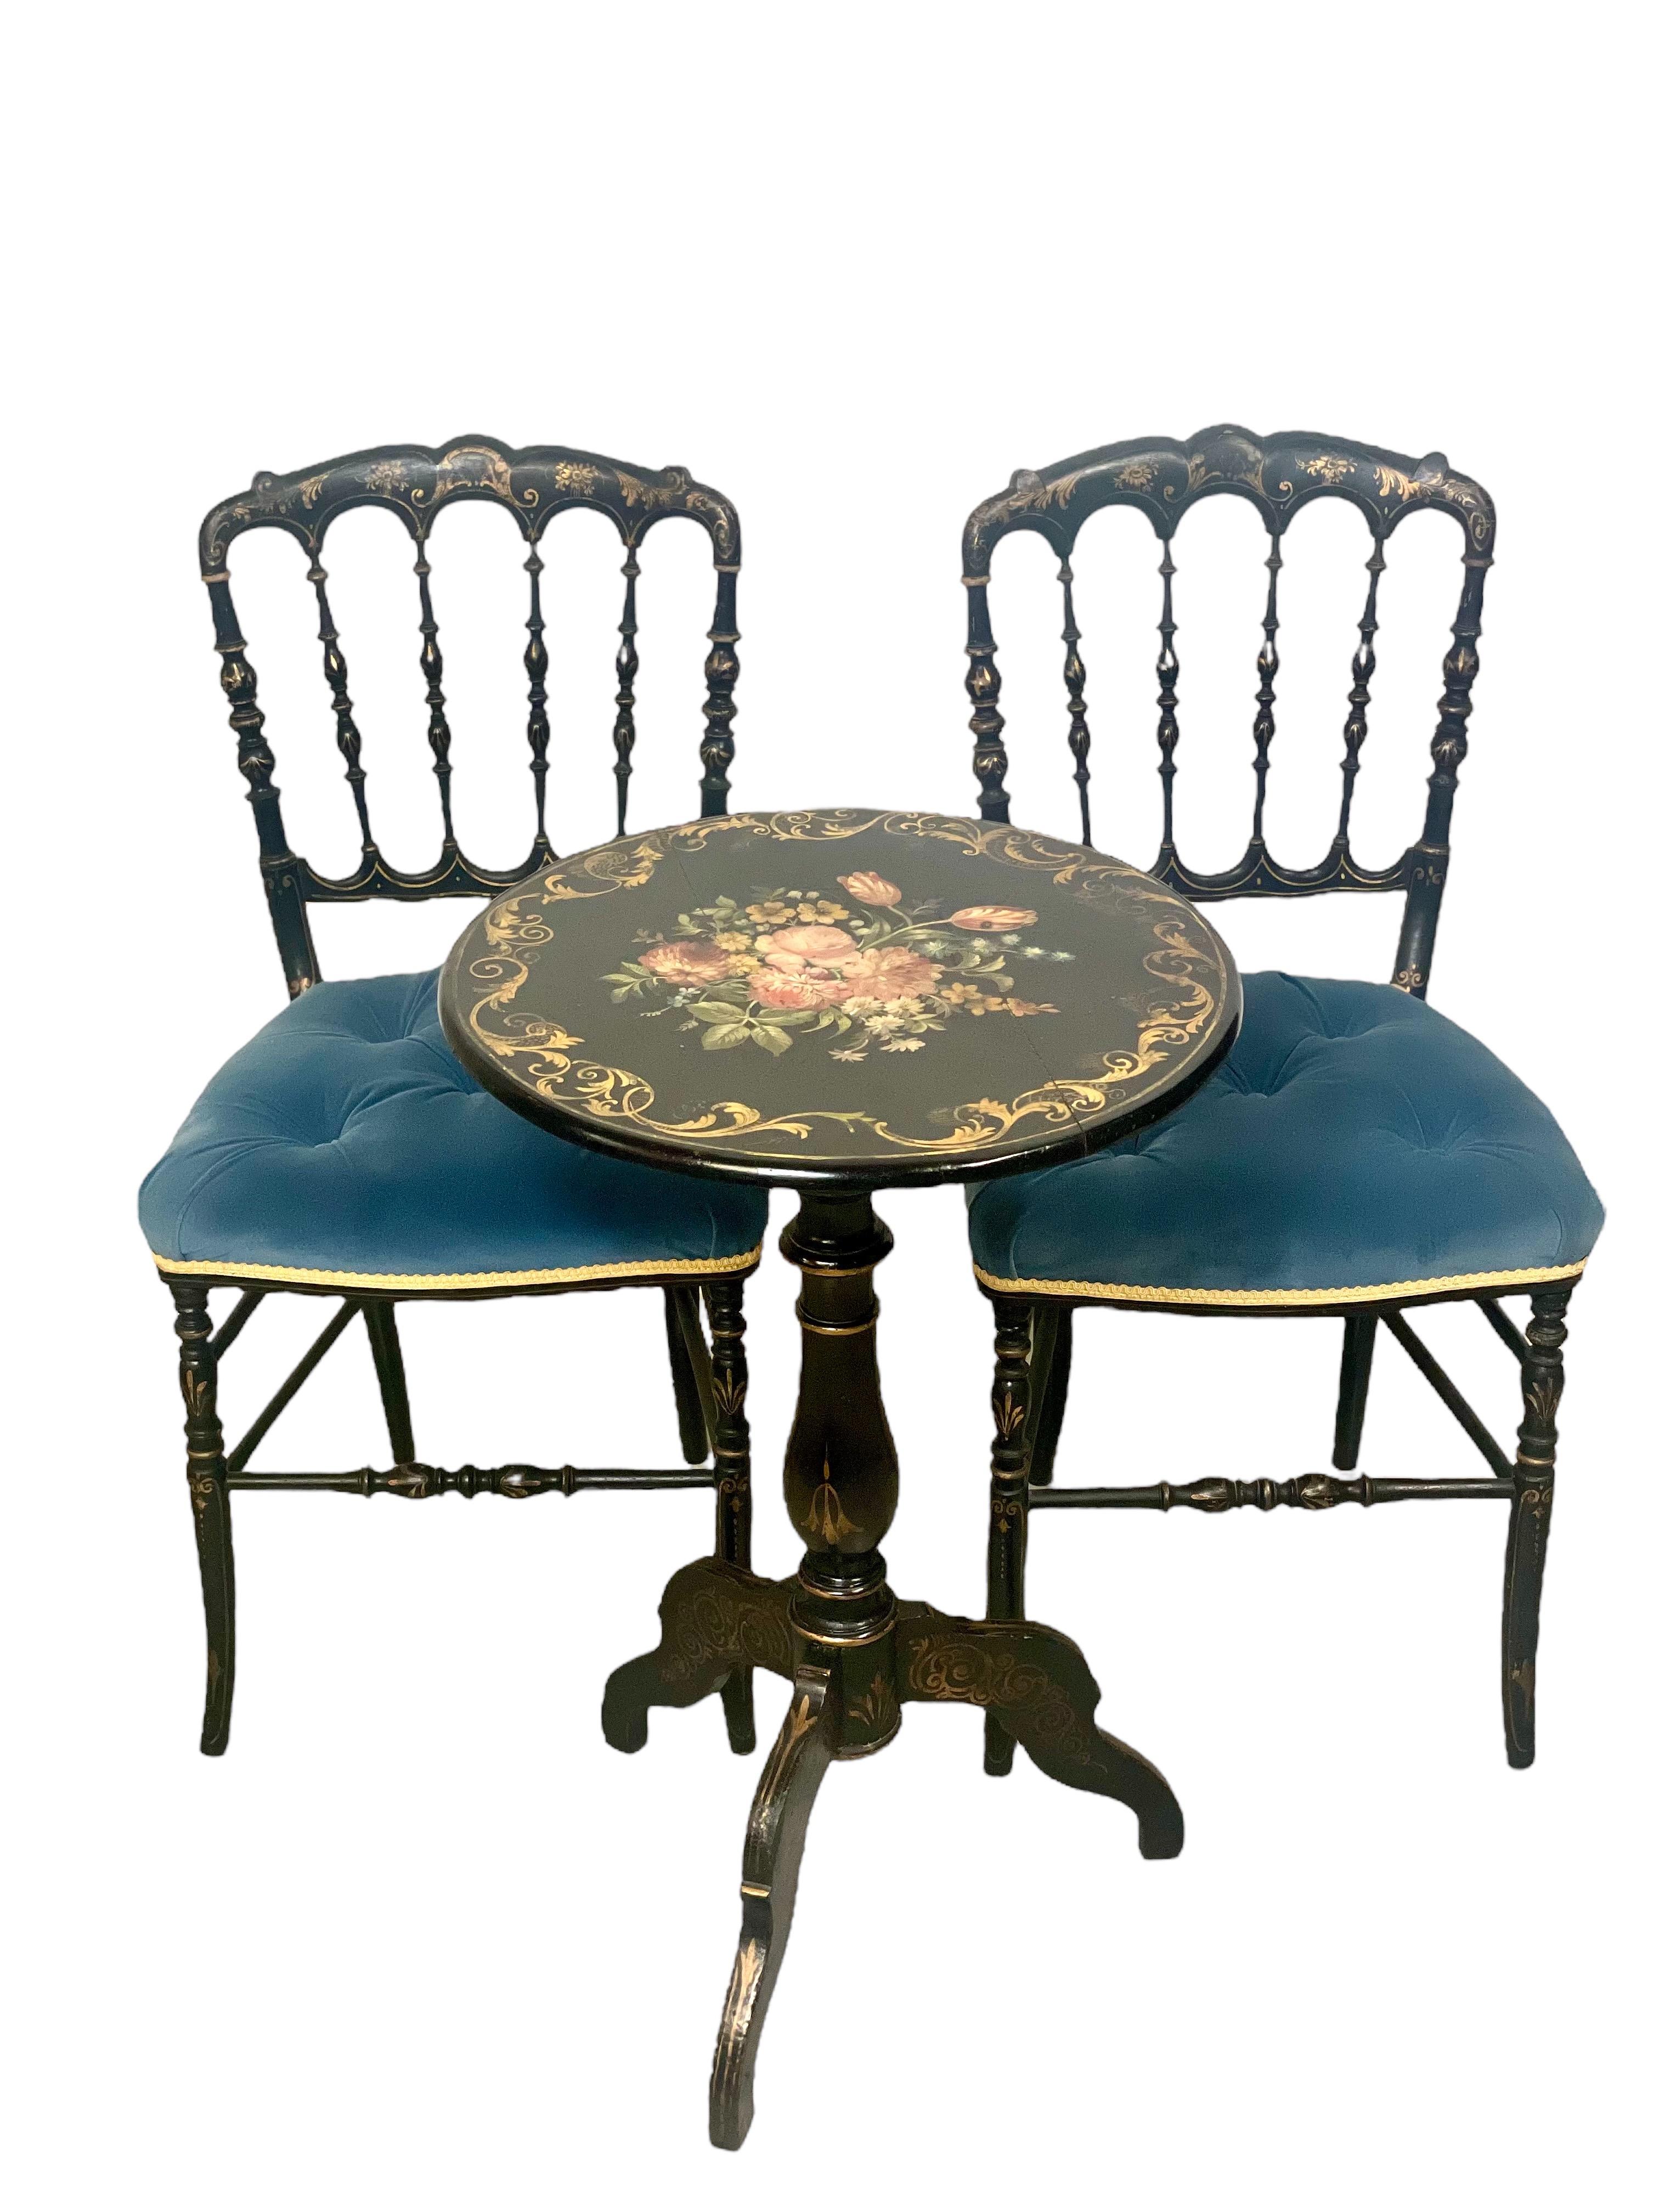 19th Century Napoleon III period Ebonized Guéridon Table